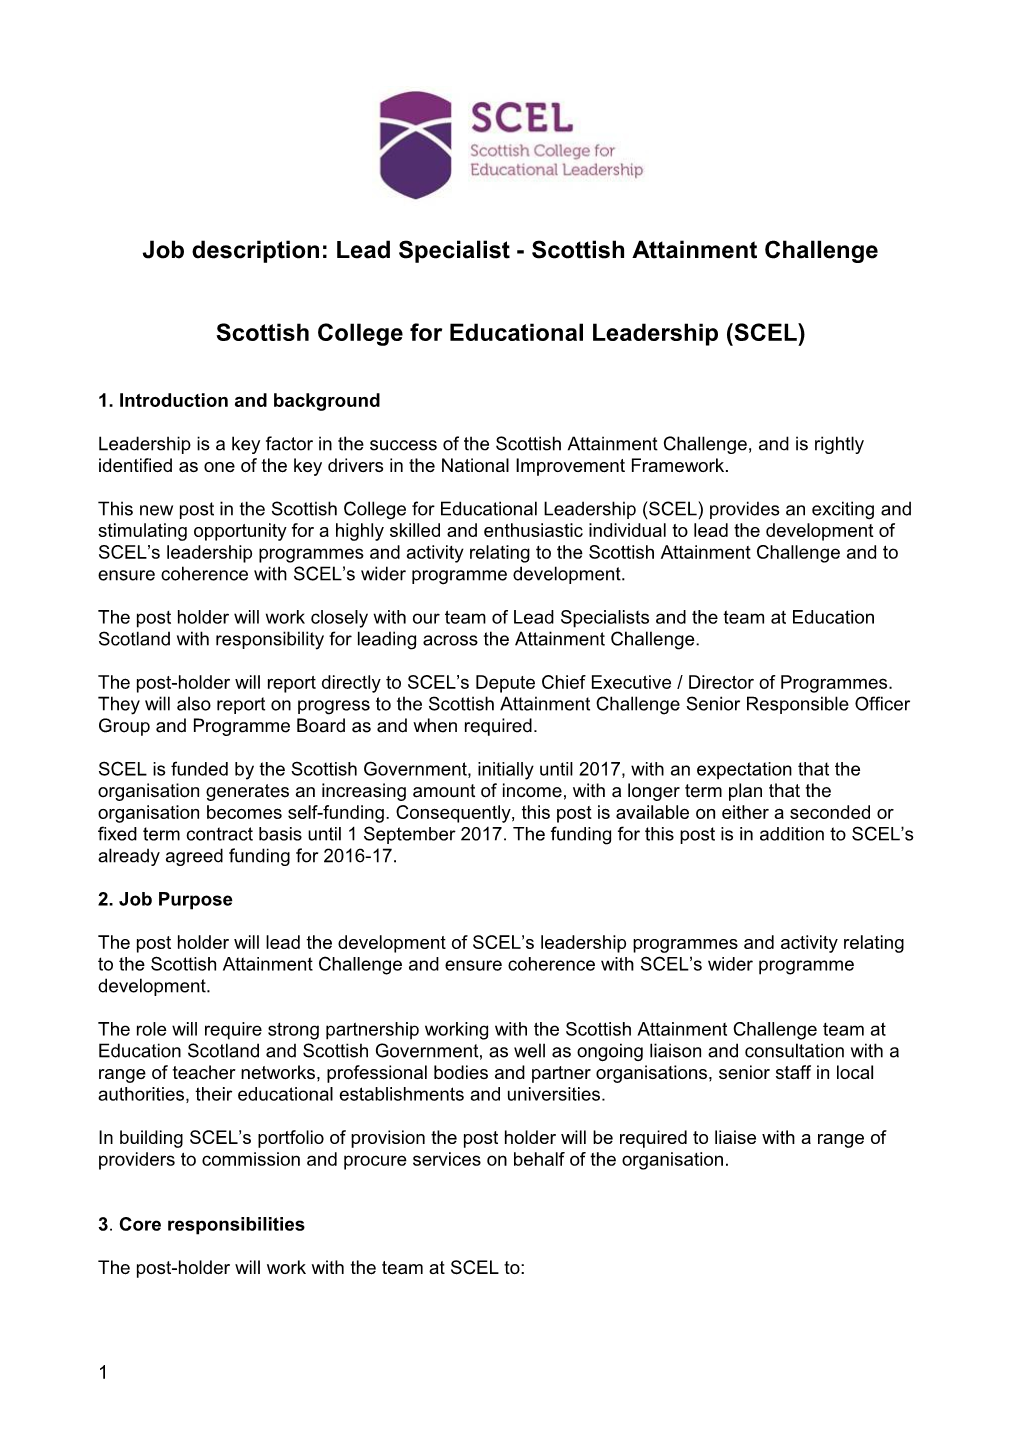 Job Description: Lead Specialist - Scottish Attainment Challenge